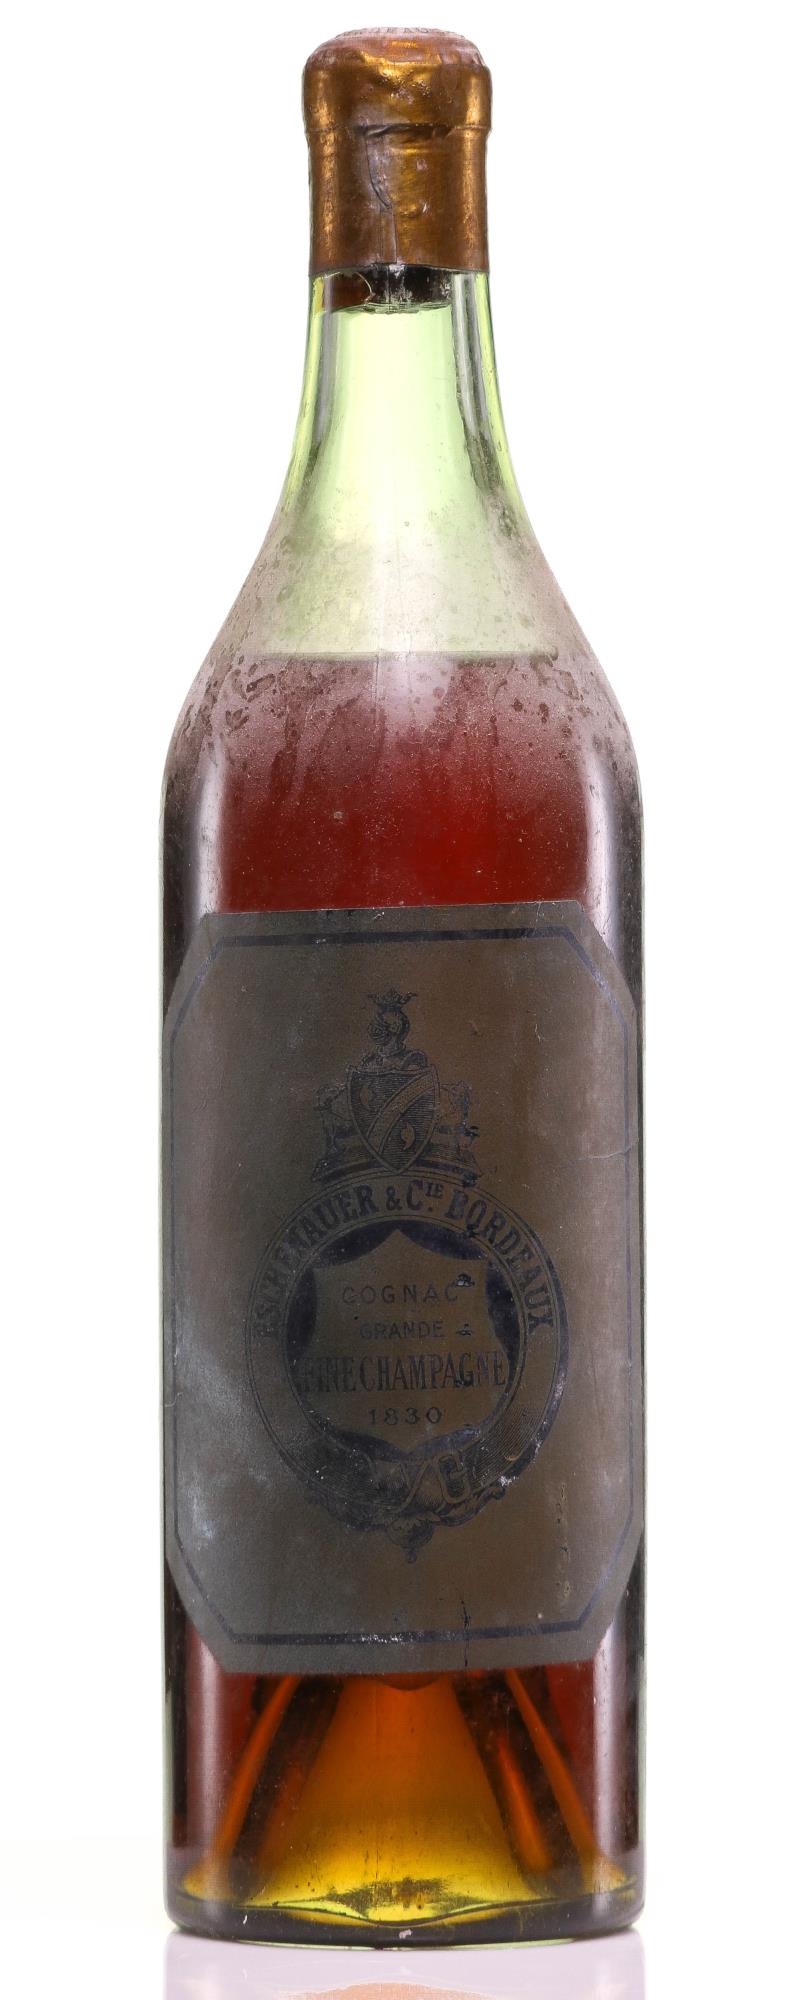 Eschenauer & Co 1830 Cognac - Grande Fine Champagne Region - Rue Pinard